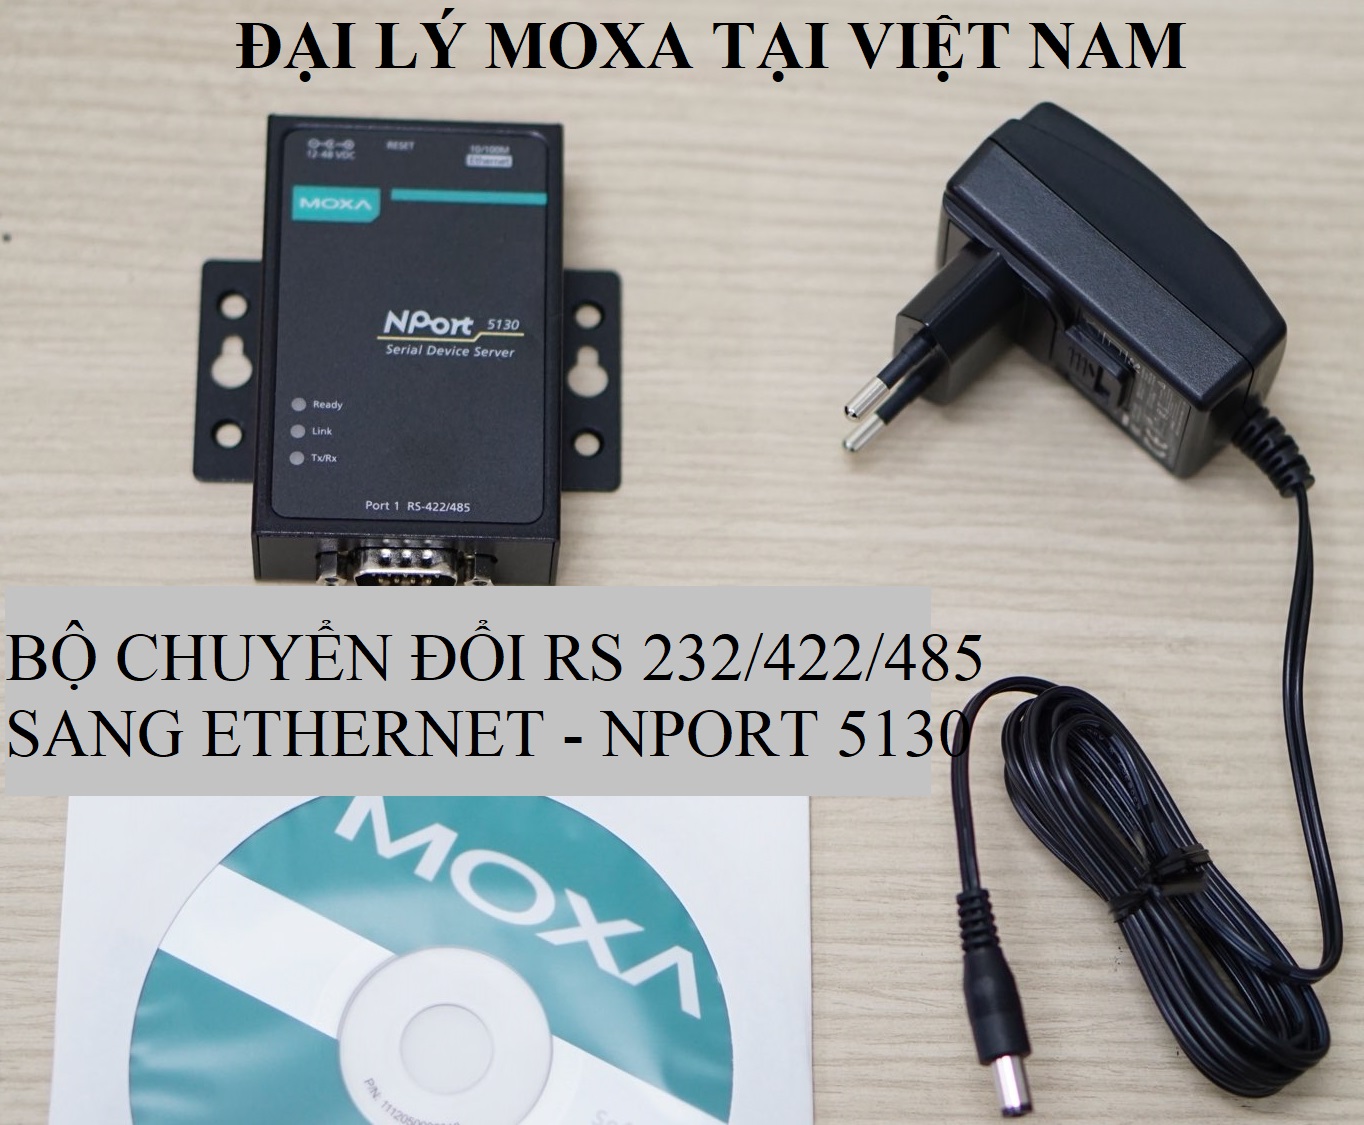 nport-5130-bo-chuyen-doi-1-cong-rs232-485-422-sang-ethernet-moxa-viet-nam-moxa-vietnam.png